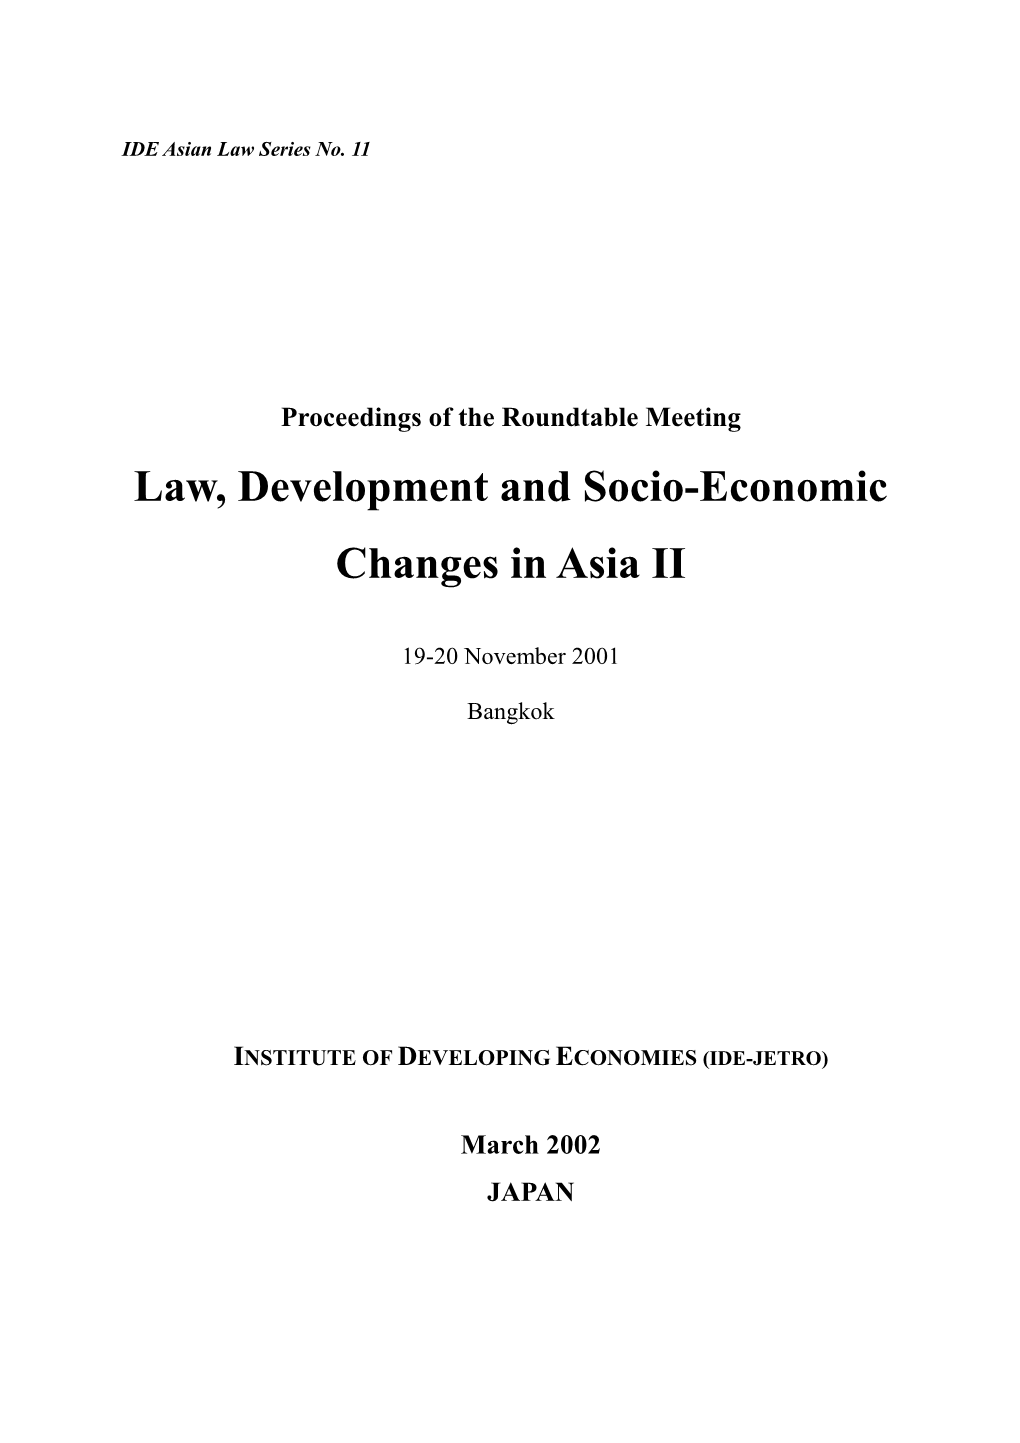 Law, Development and Socio-Economic Changes in Asia II